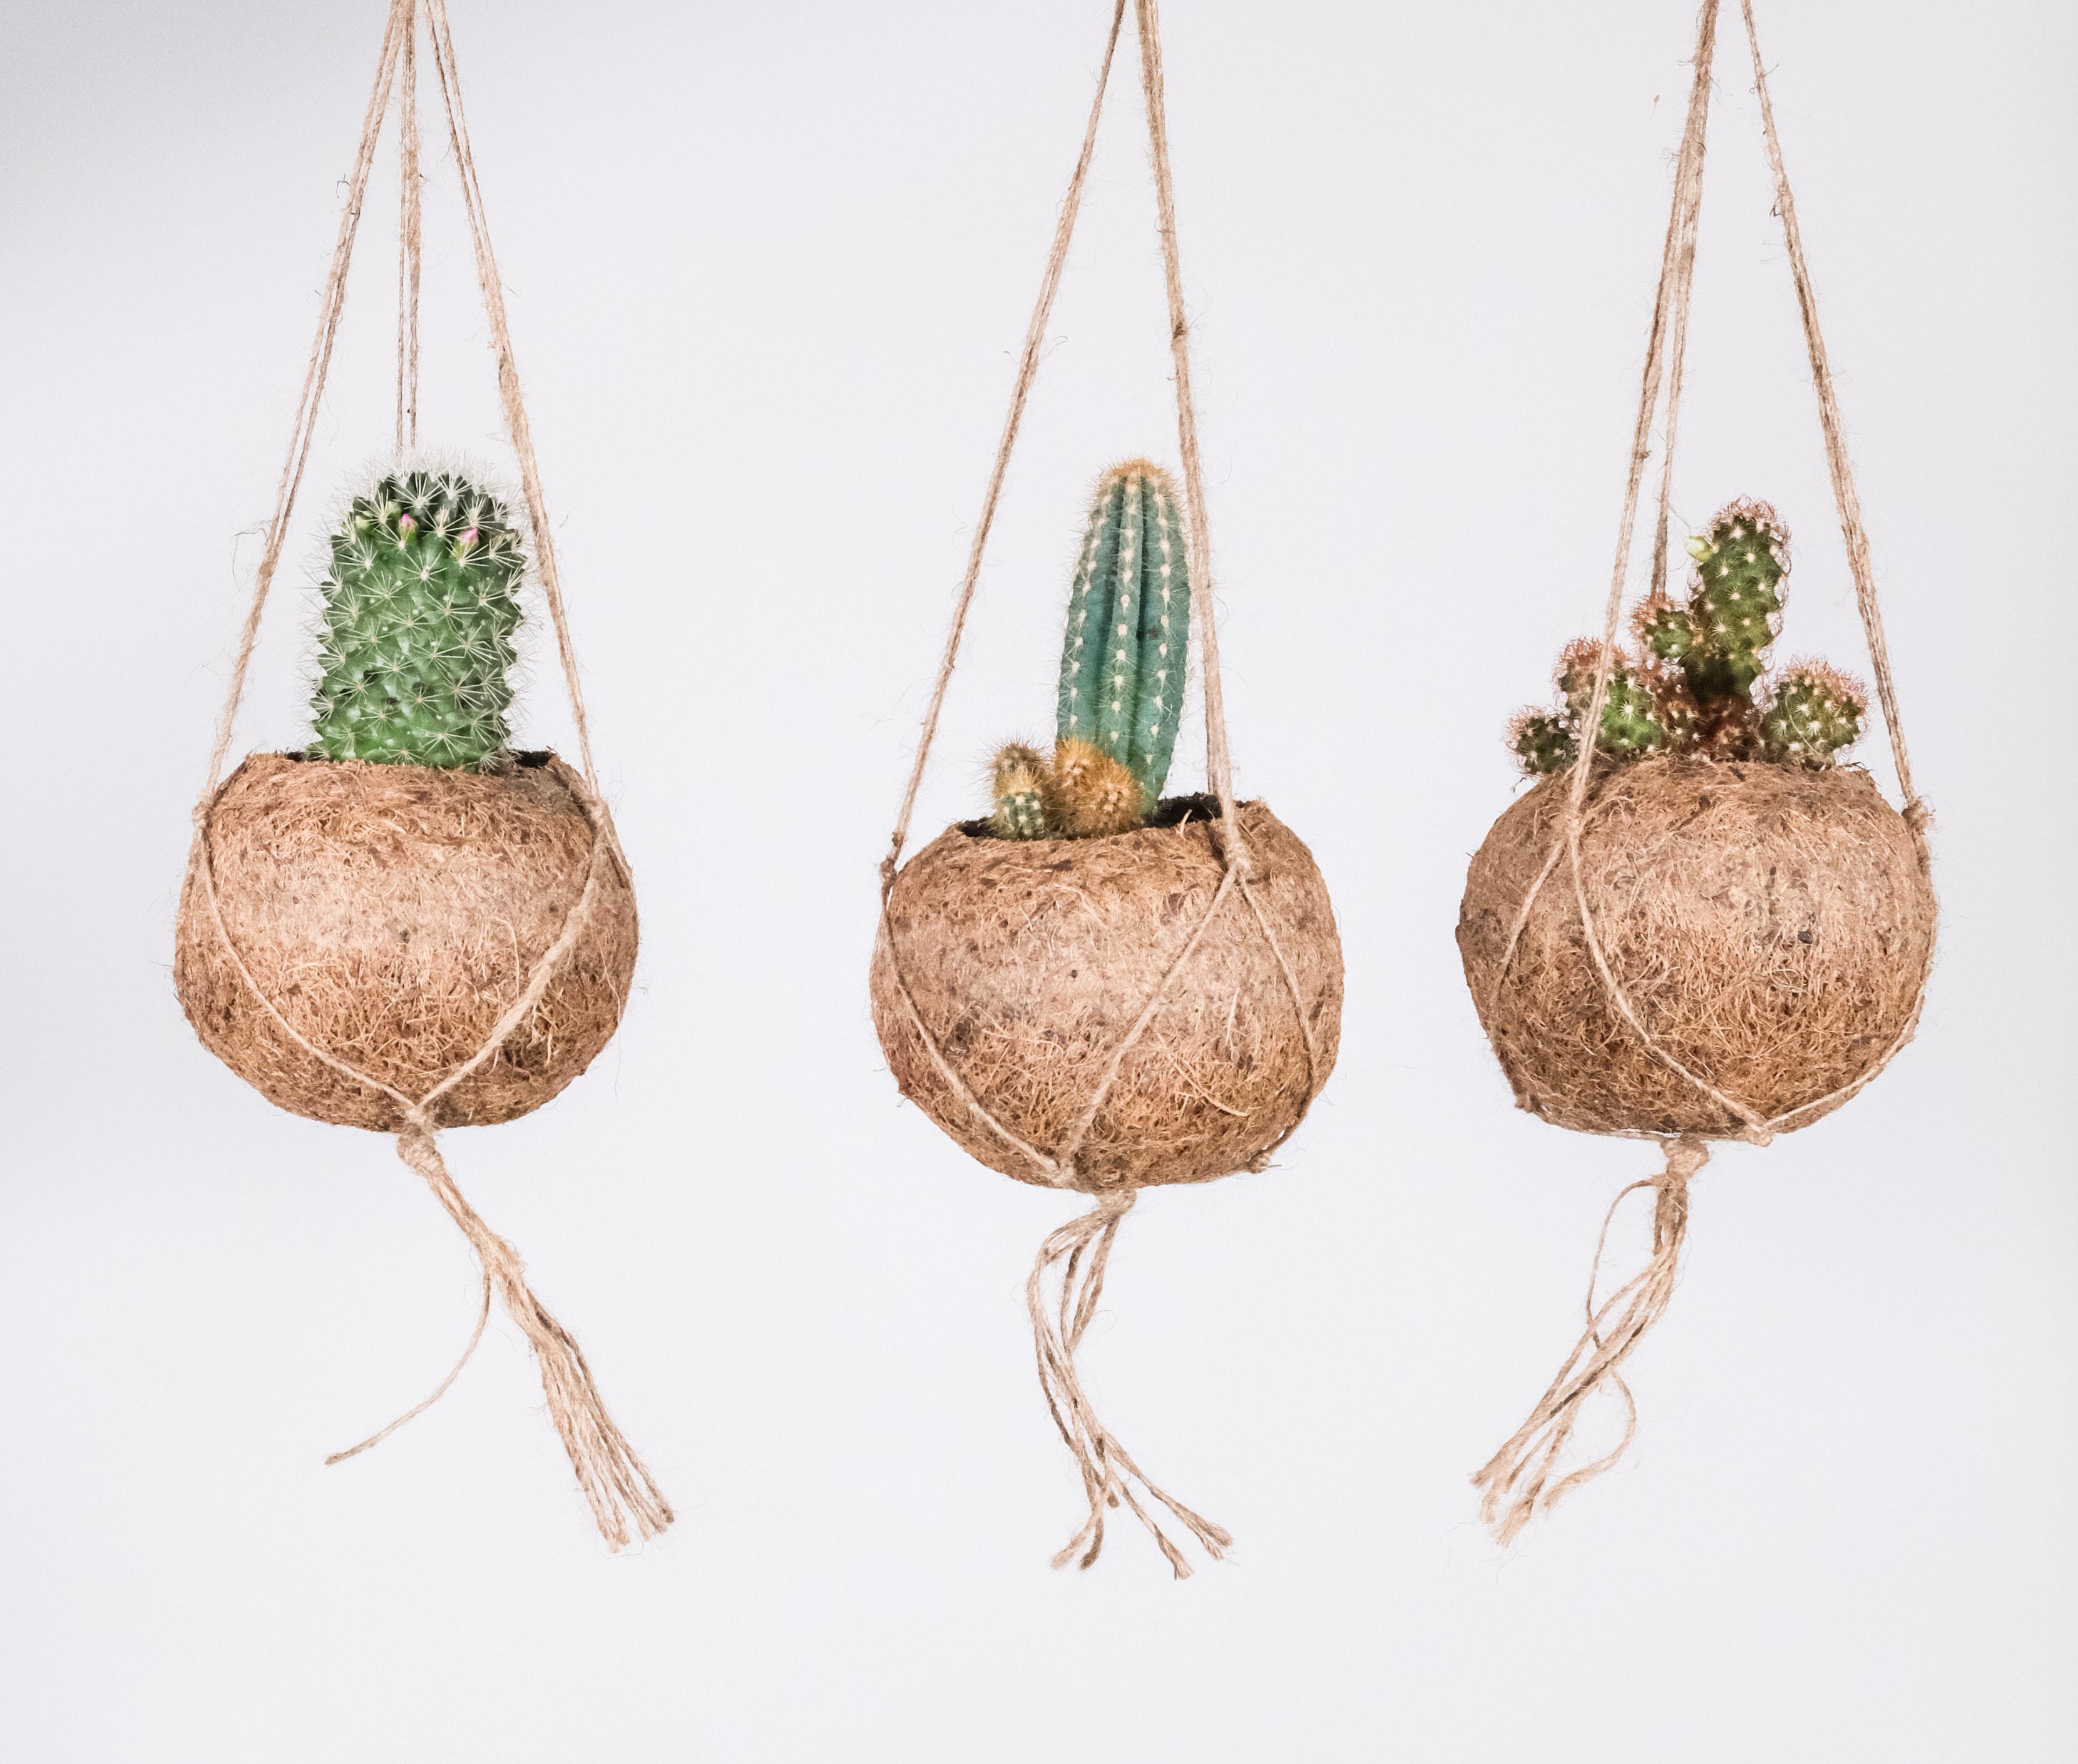 Three cacti in natural hanging pots